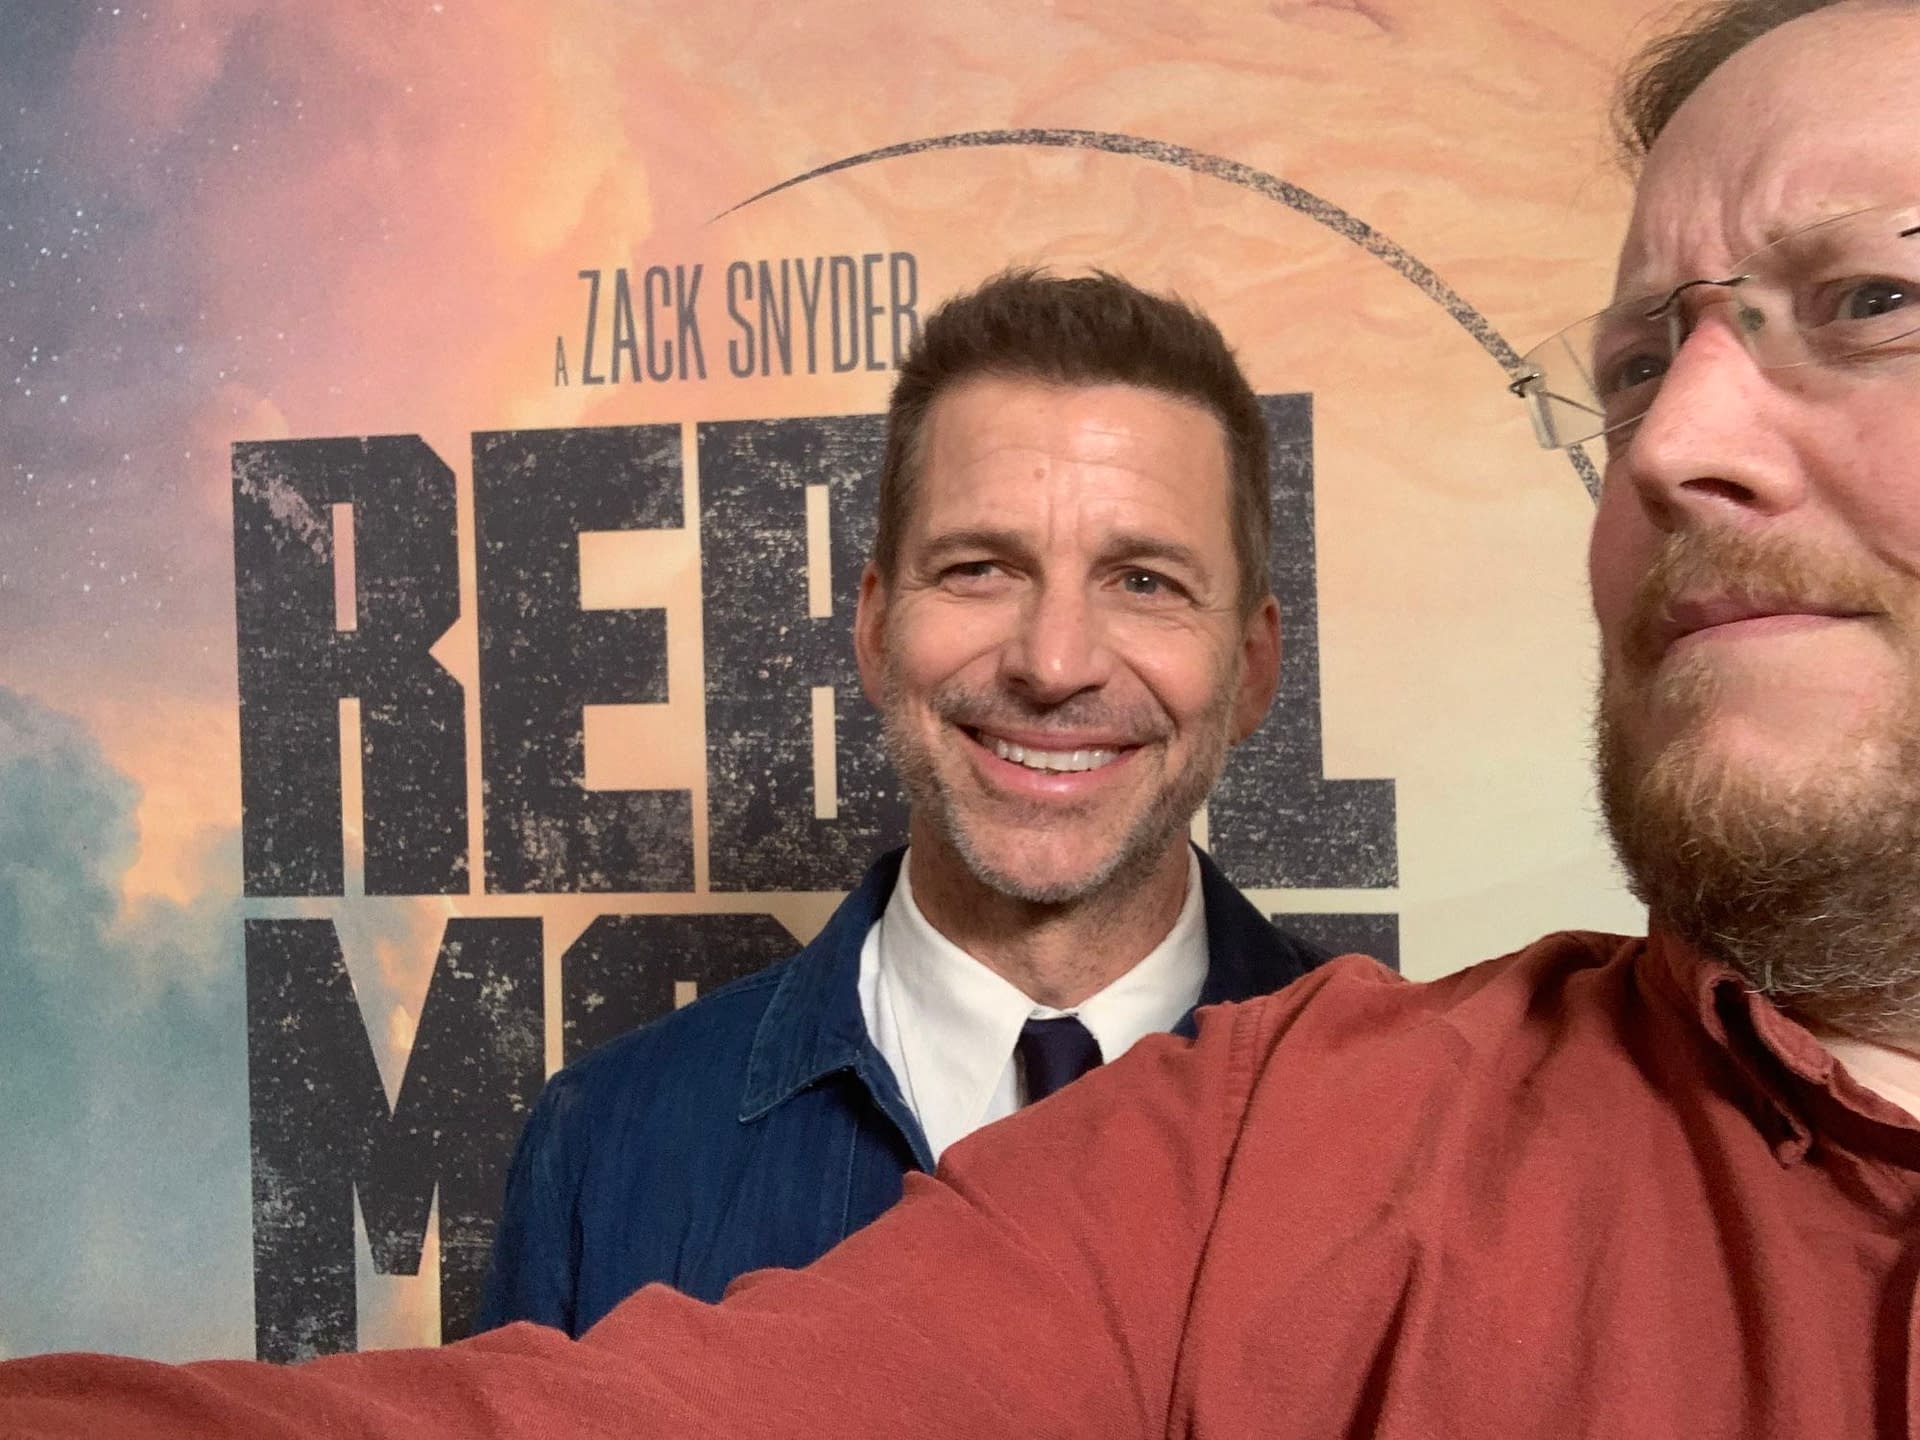 Rebel Moon's Zack Snyder unravels secrets of his universe